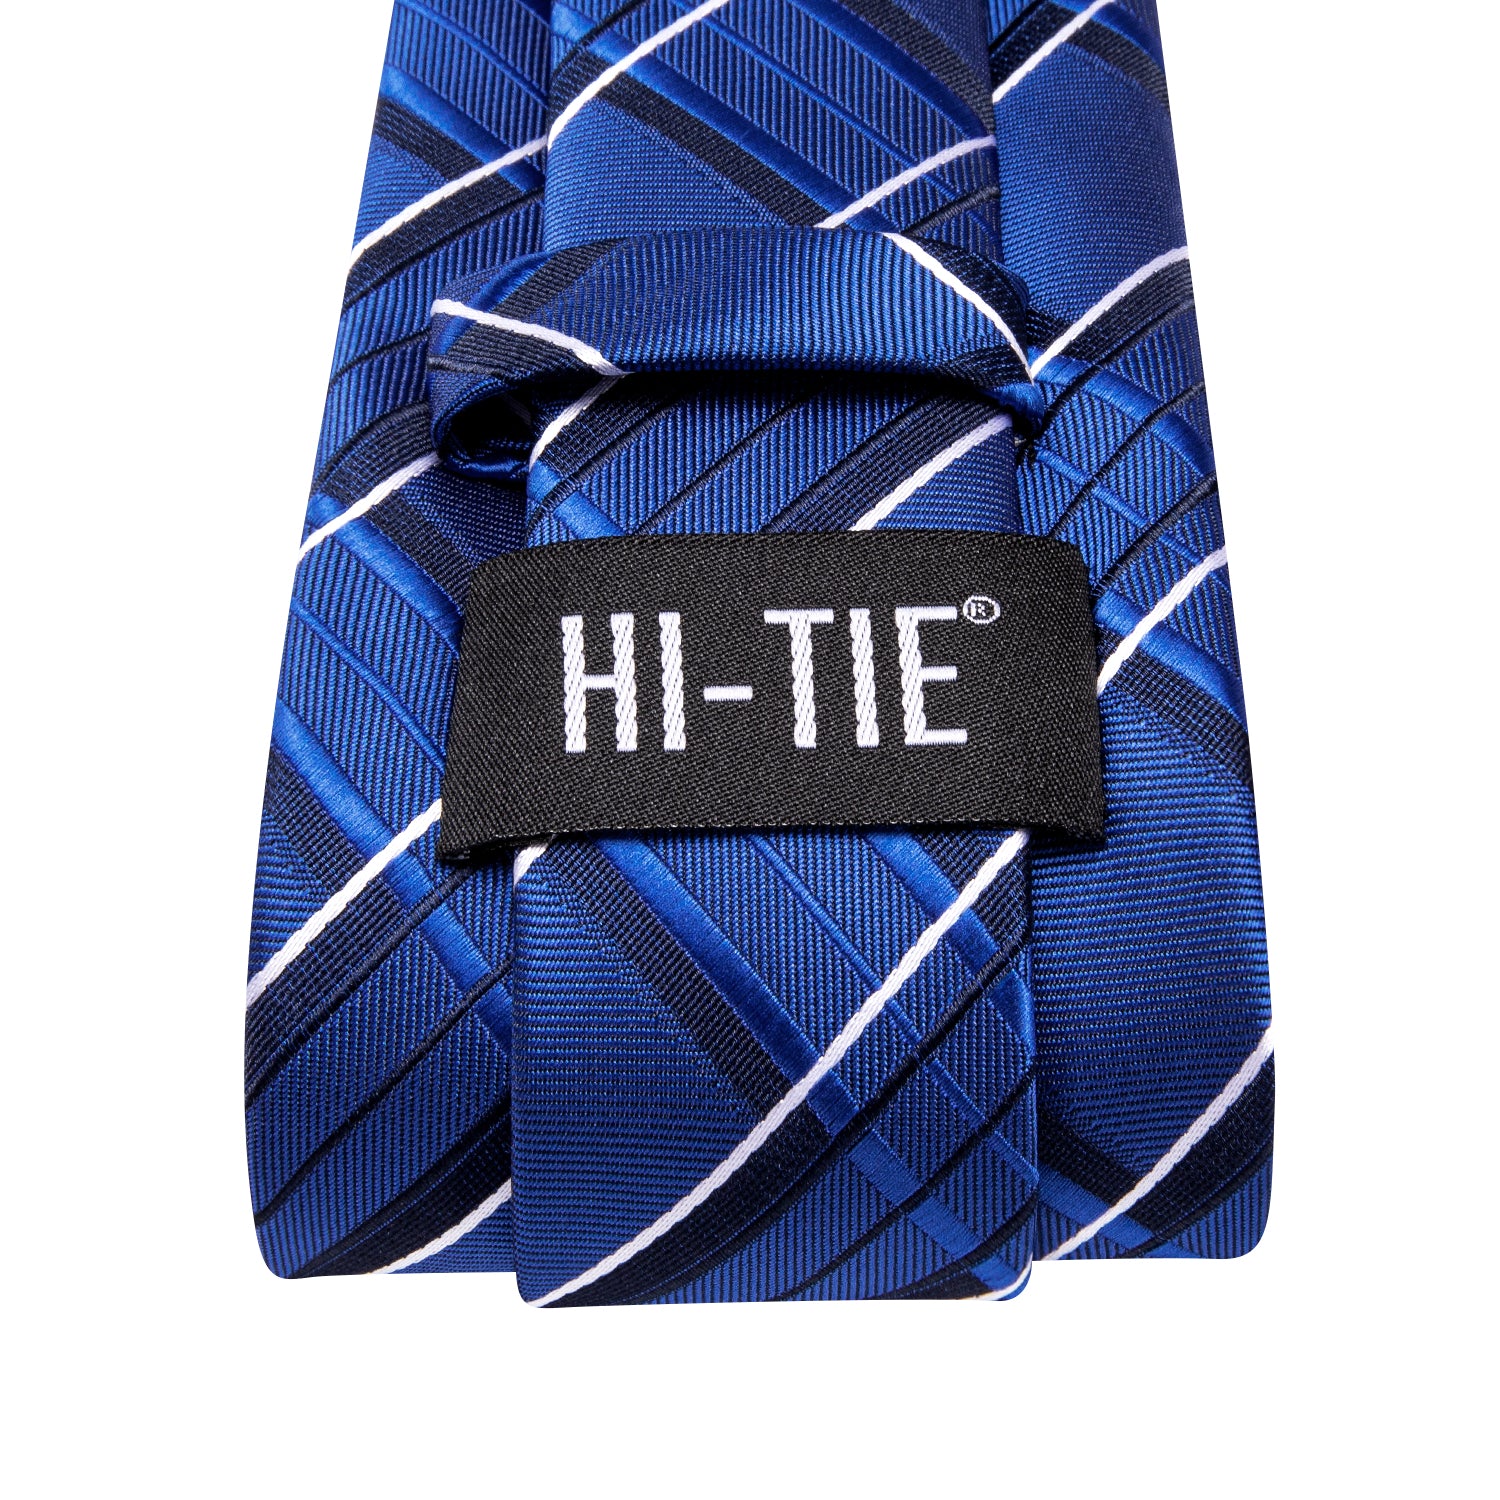 Hi-Tie Blue Black Plaid Men's Tie Pocket Square Cufflinks Set